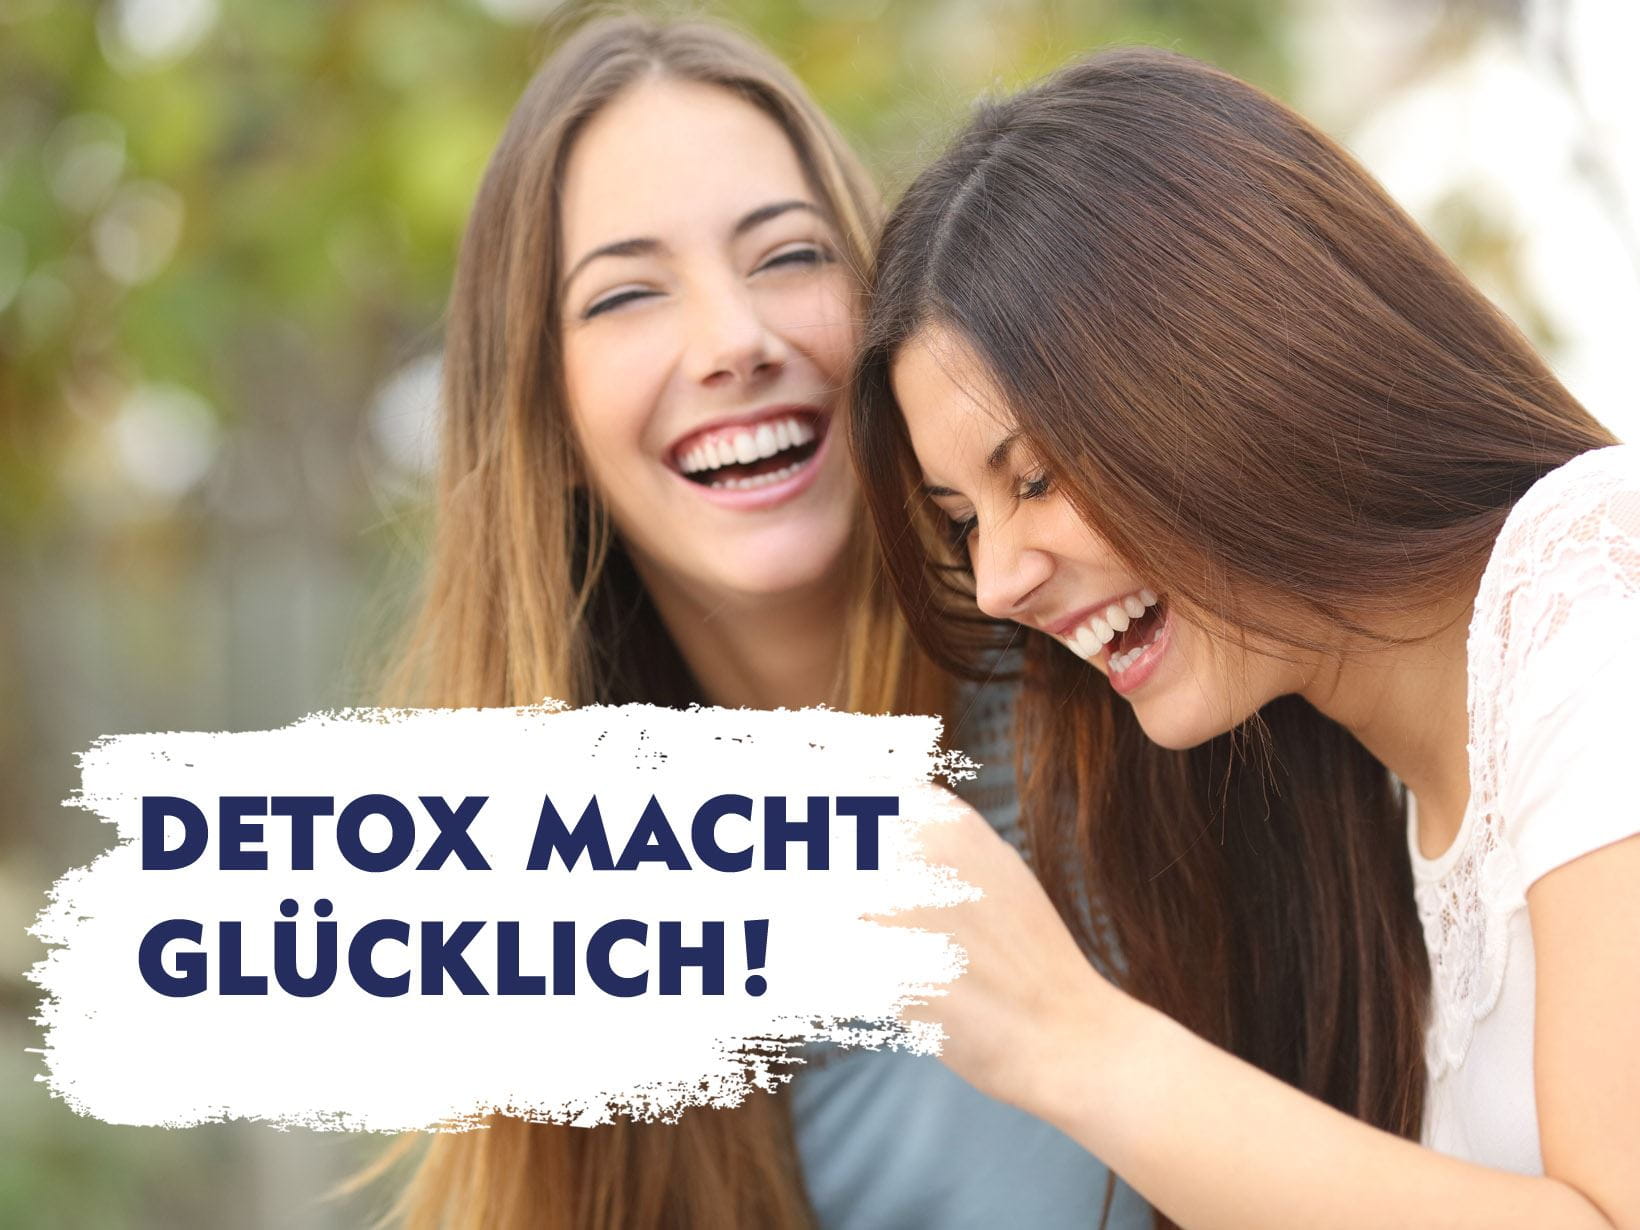 Detox-Mythen: Detox macht glücklich!